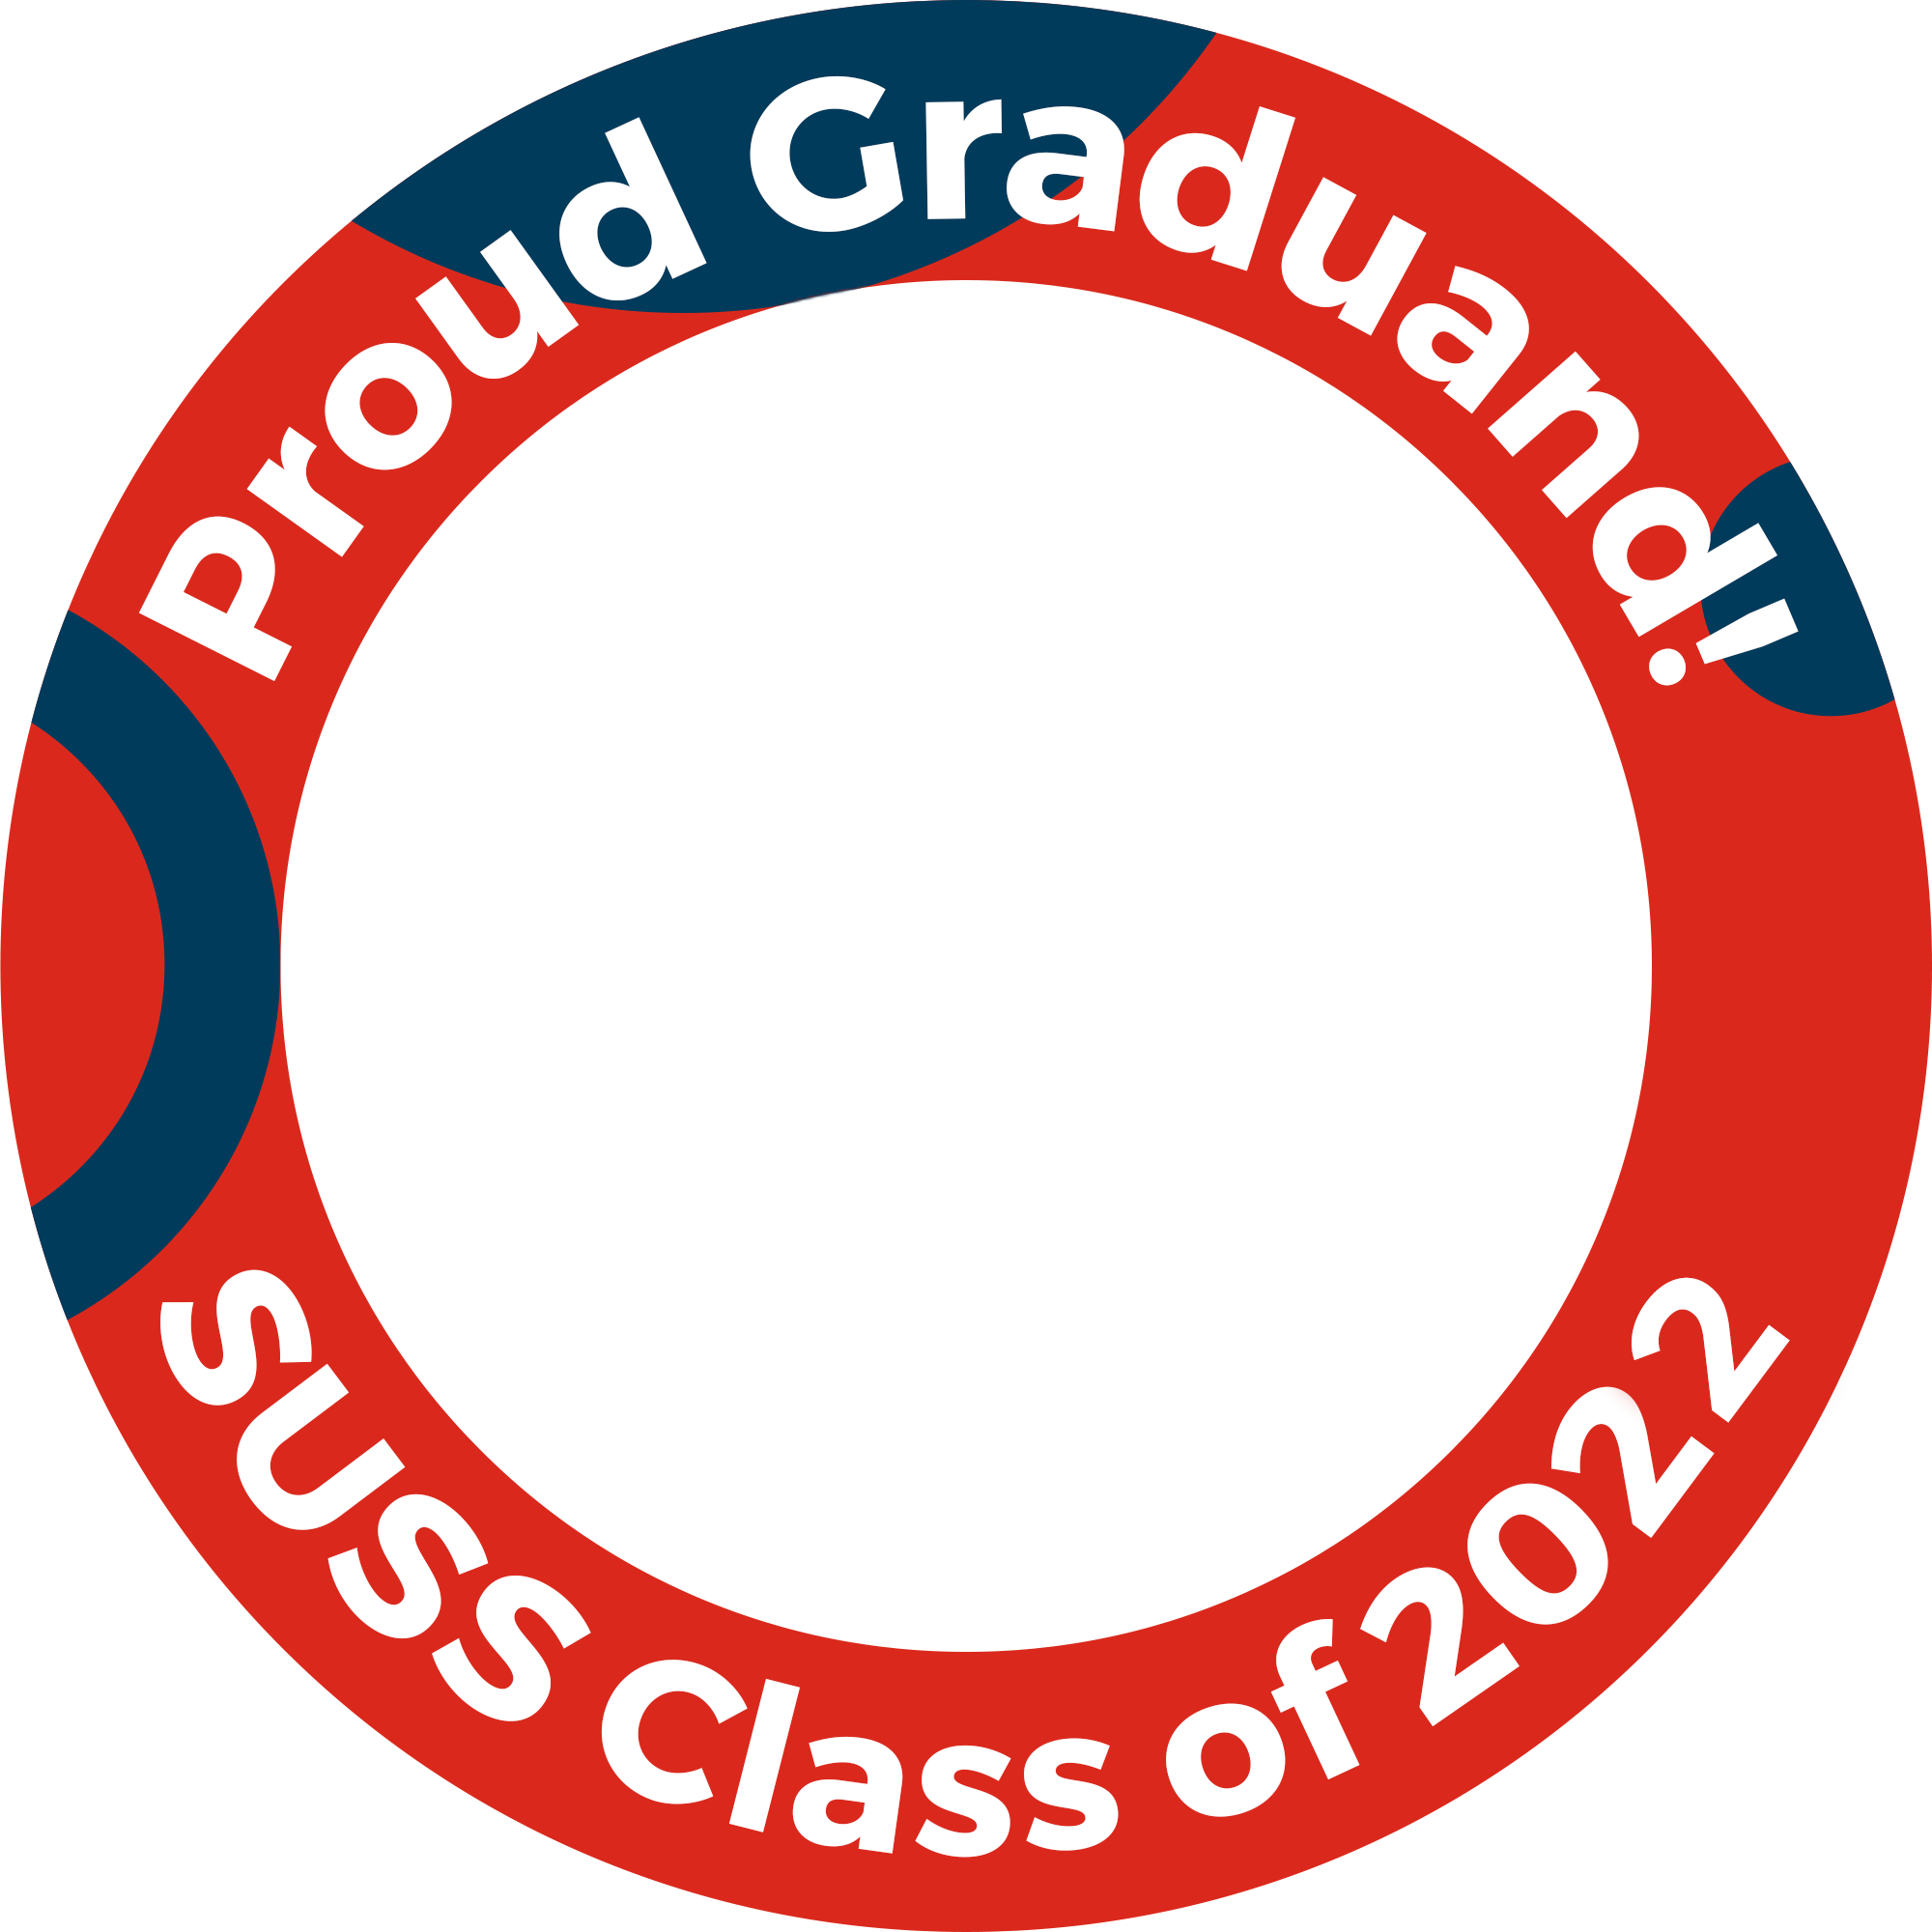 A_Proud Graduand!